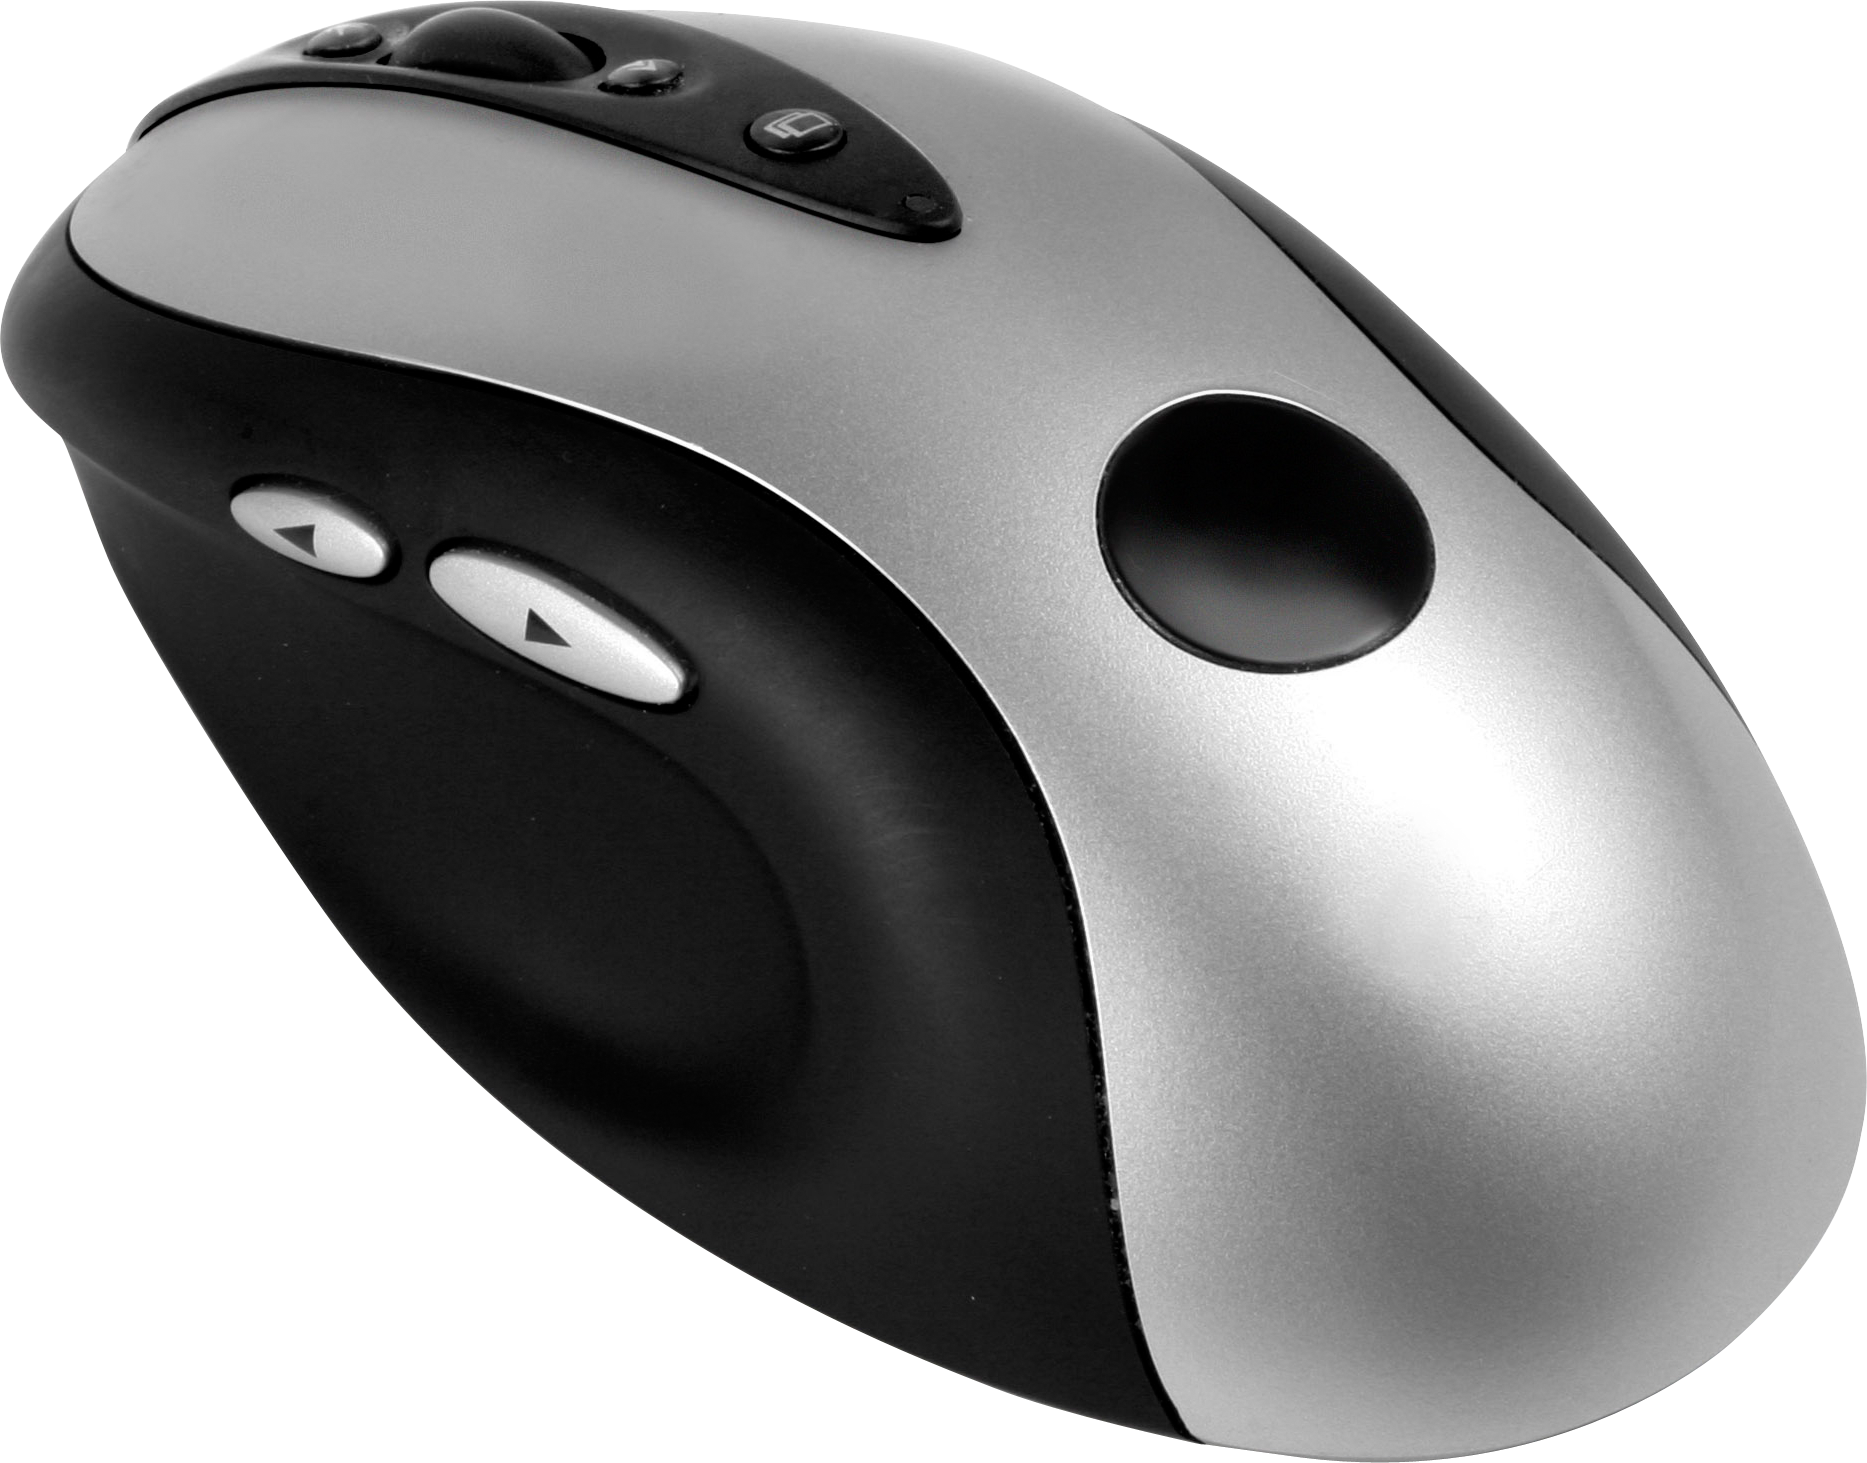 Pc Mouse Png Image - Pc Mouse, Transparent background PNG HD thumbnail